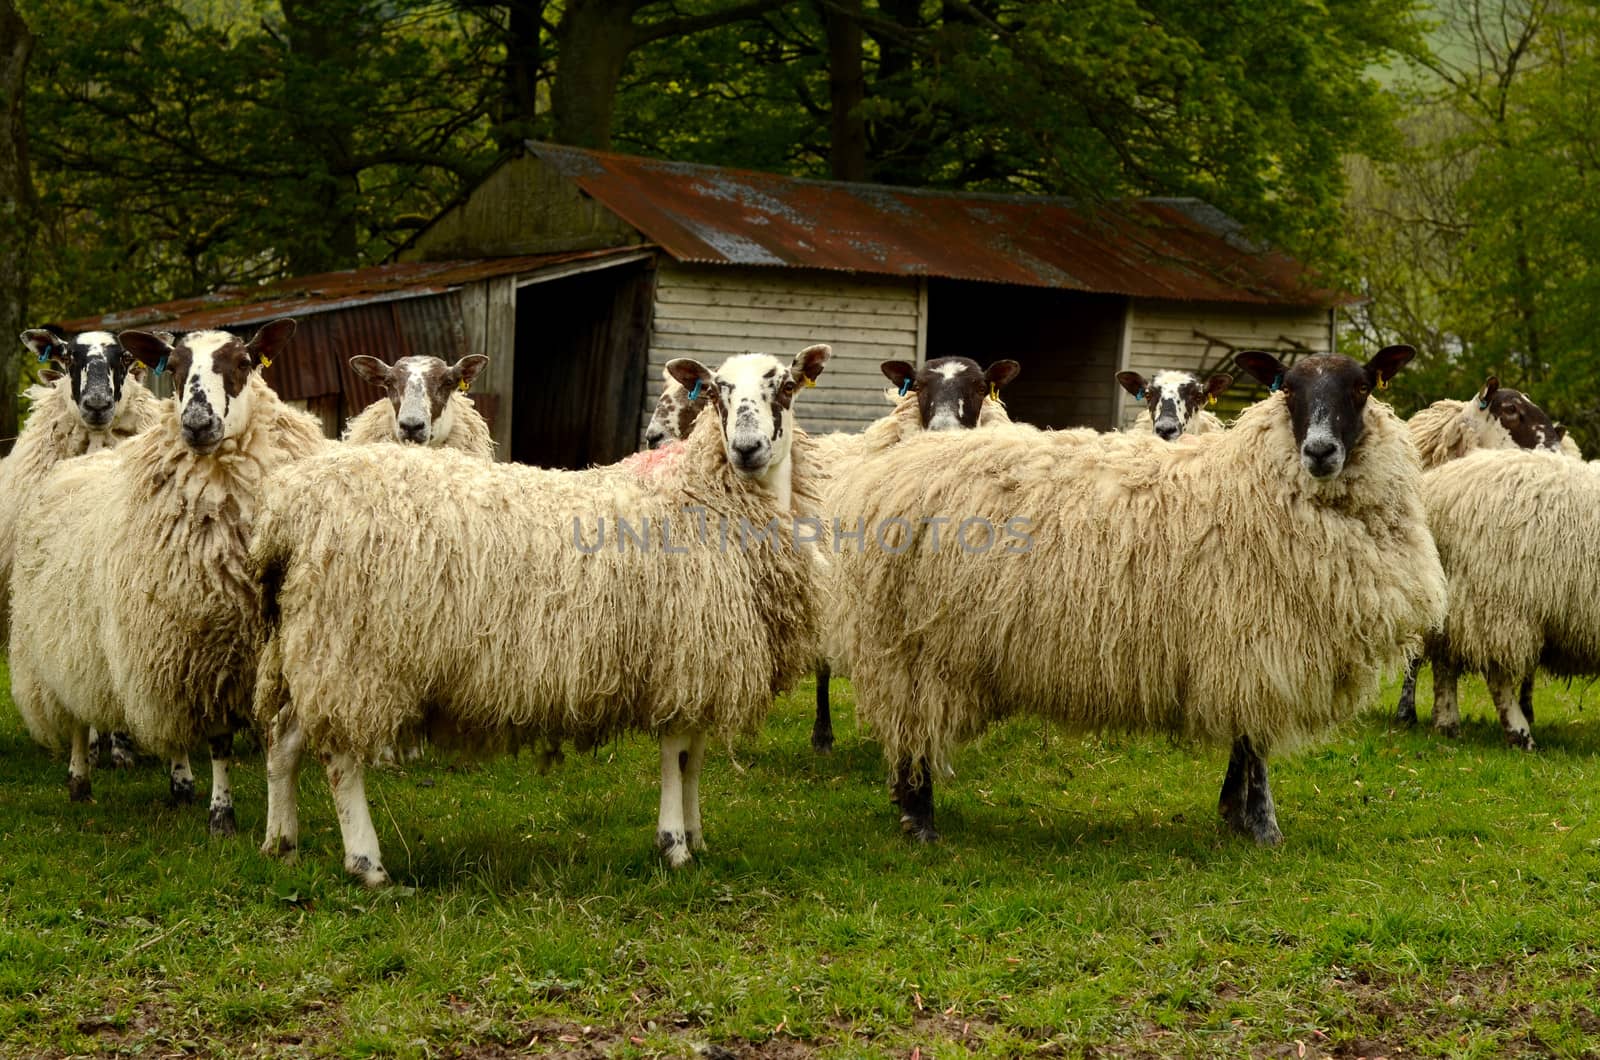 Sheep and barn by mrdoomits